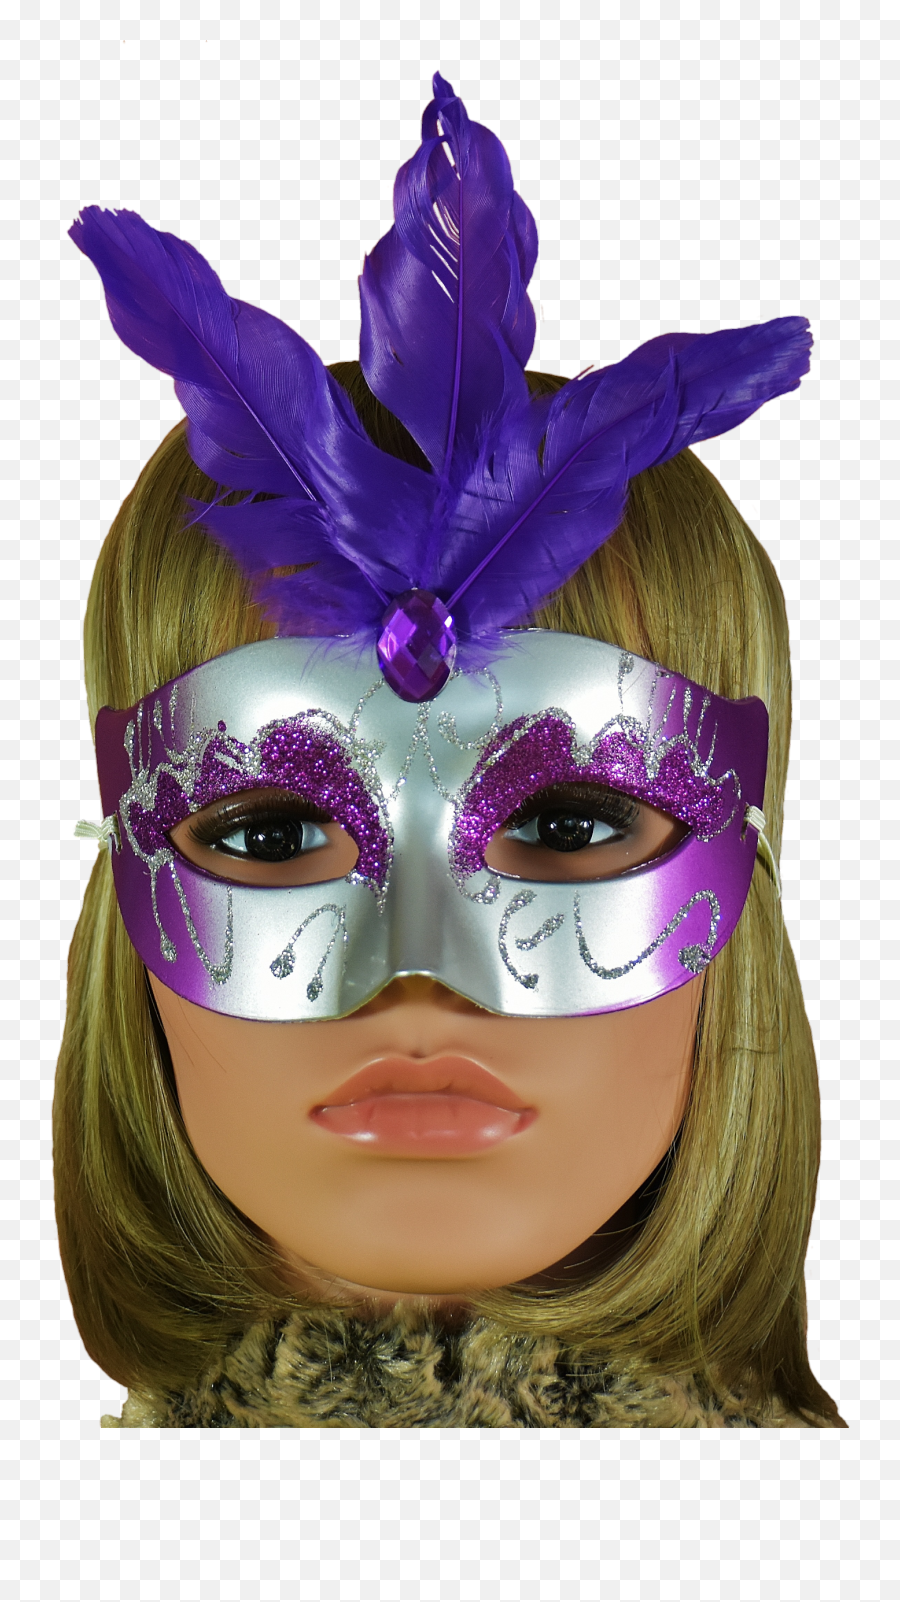 Filecarnival Mask On A Dollpng - Wikimedia Commons Emoji,Keyboard Emoji Mardi Gras Mask Image